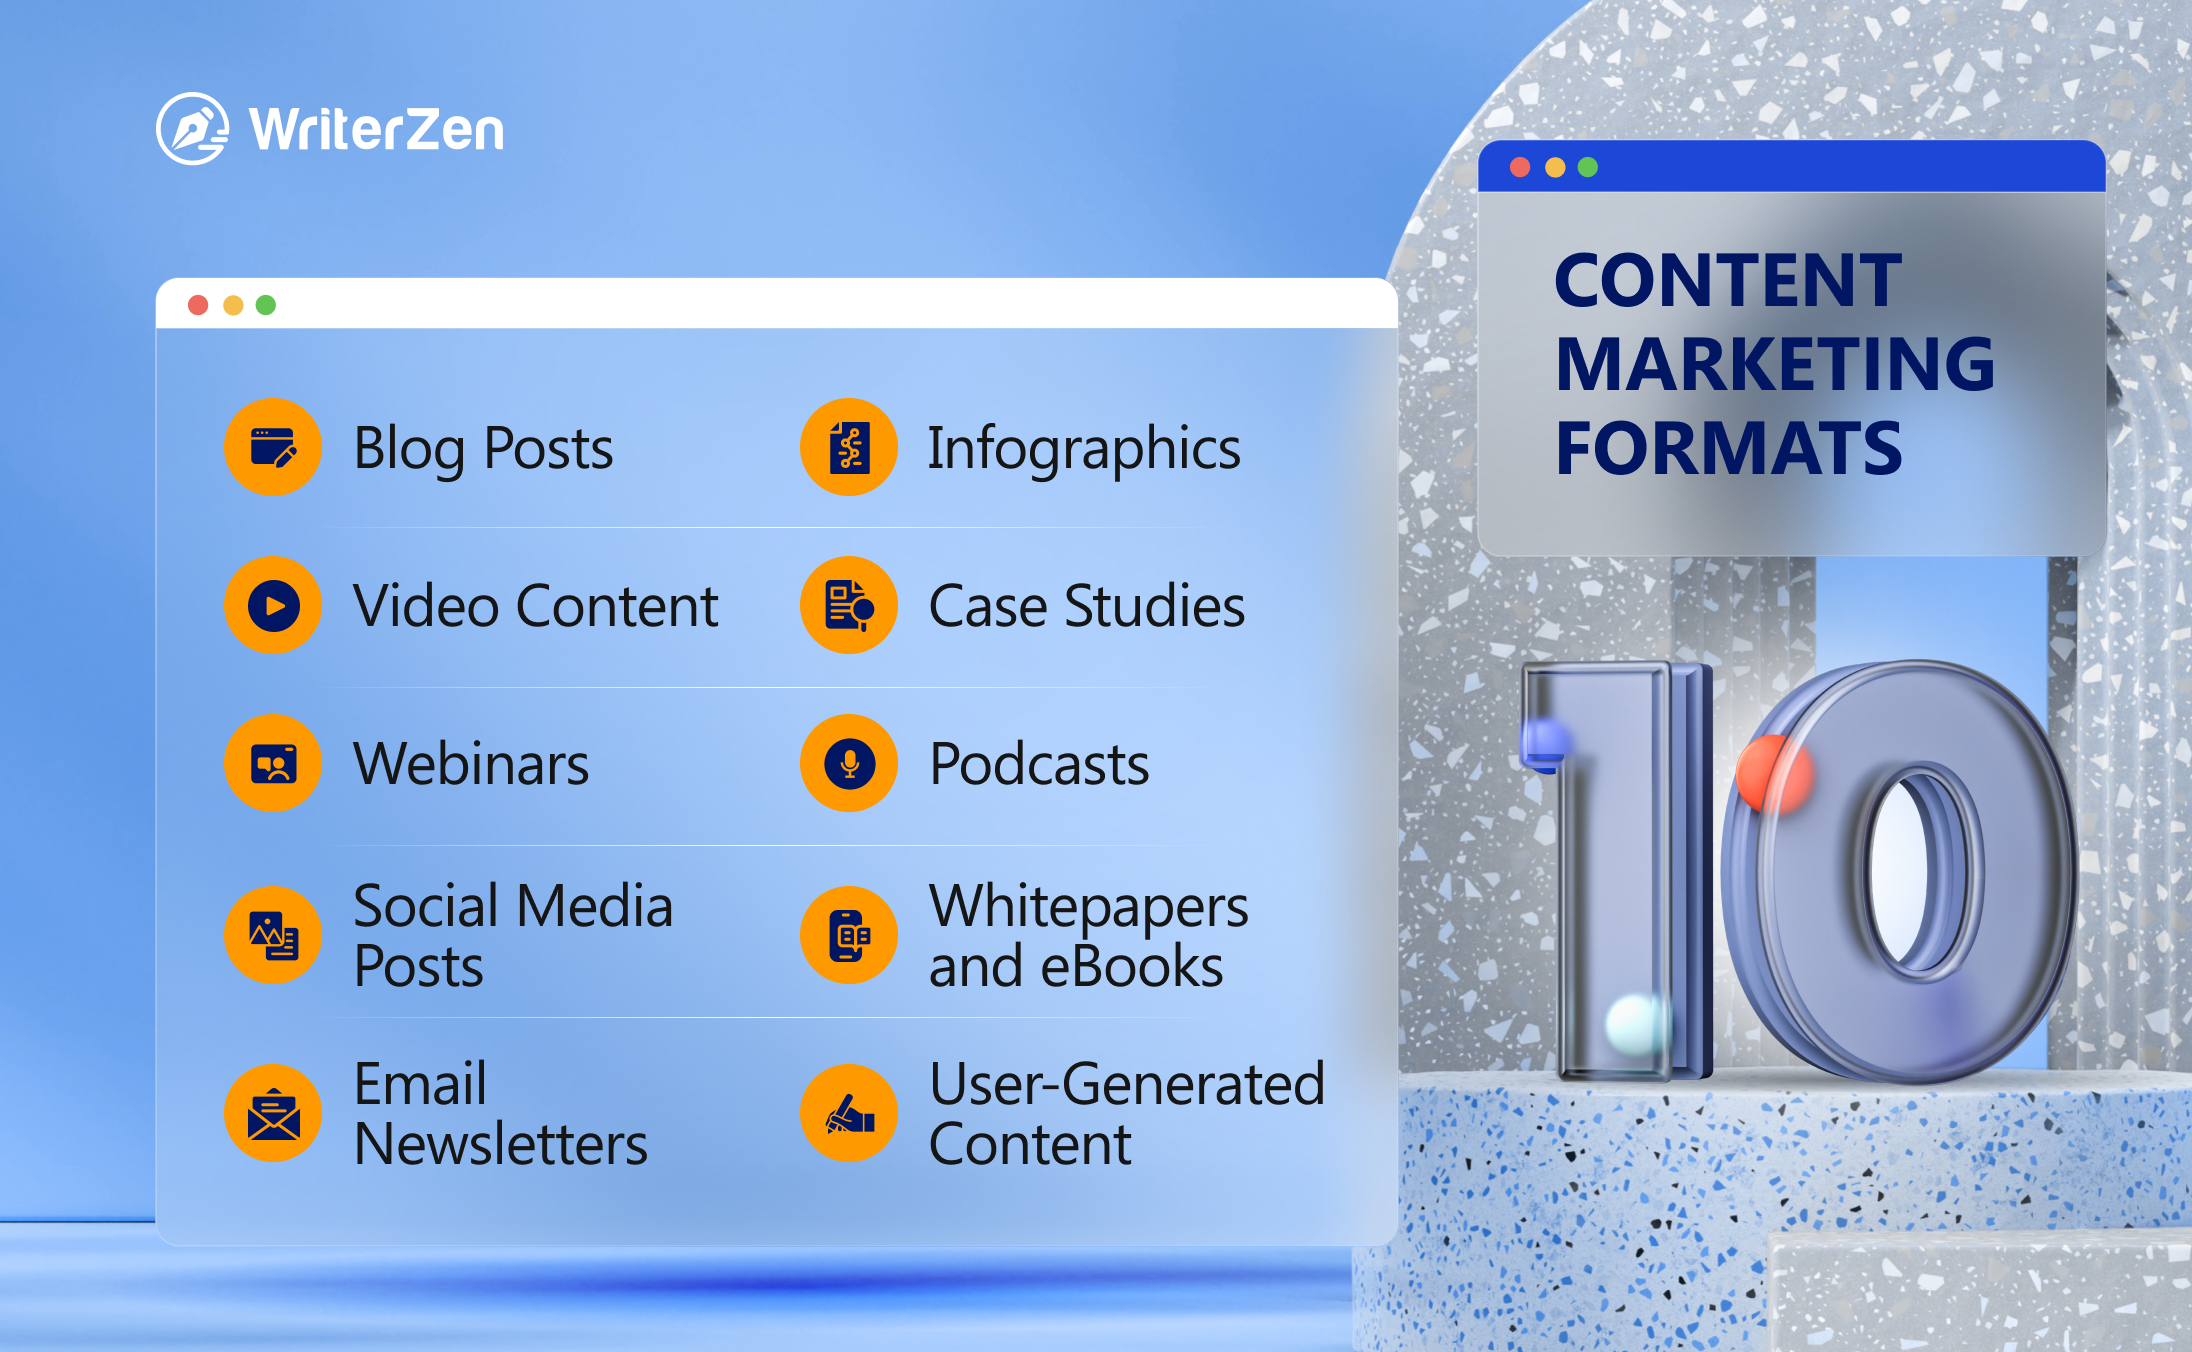 10 Content Marketing Formats